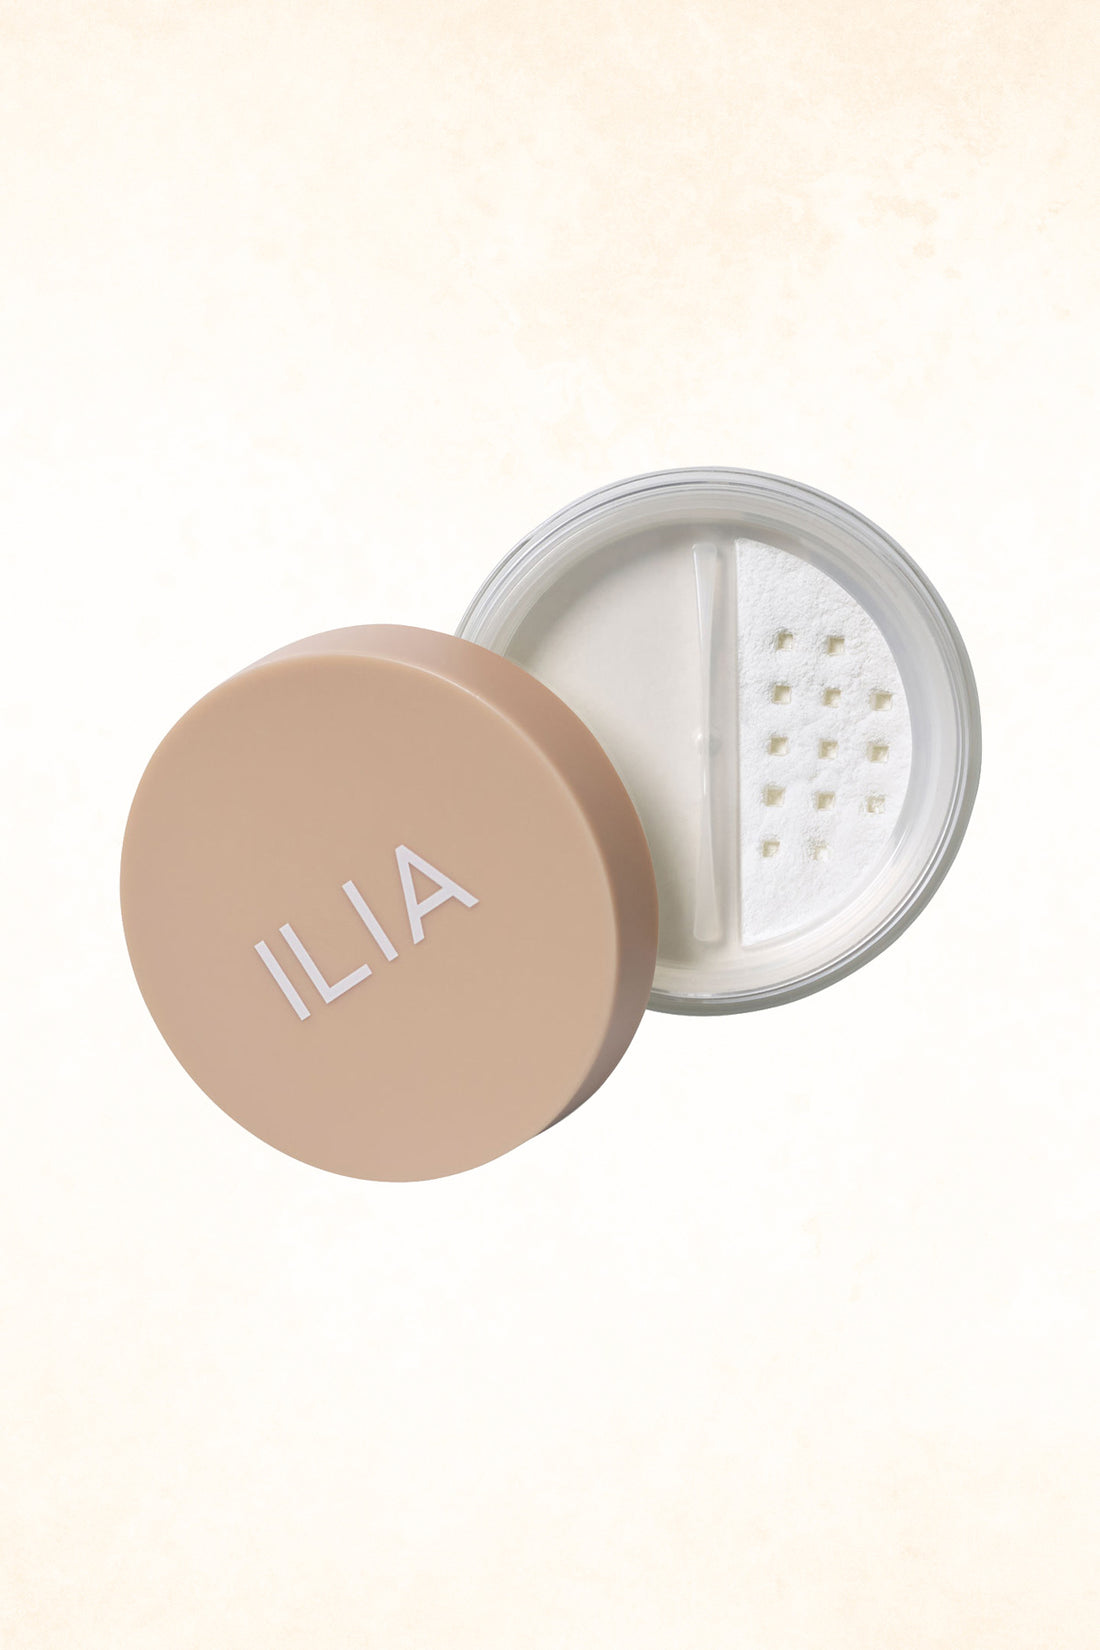 ILIA – Fade Into You – Soft Focus Finishing Powder - Jar